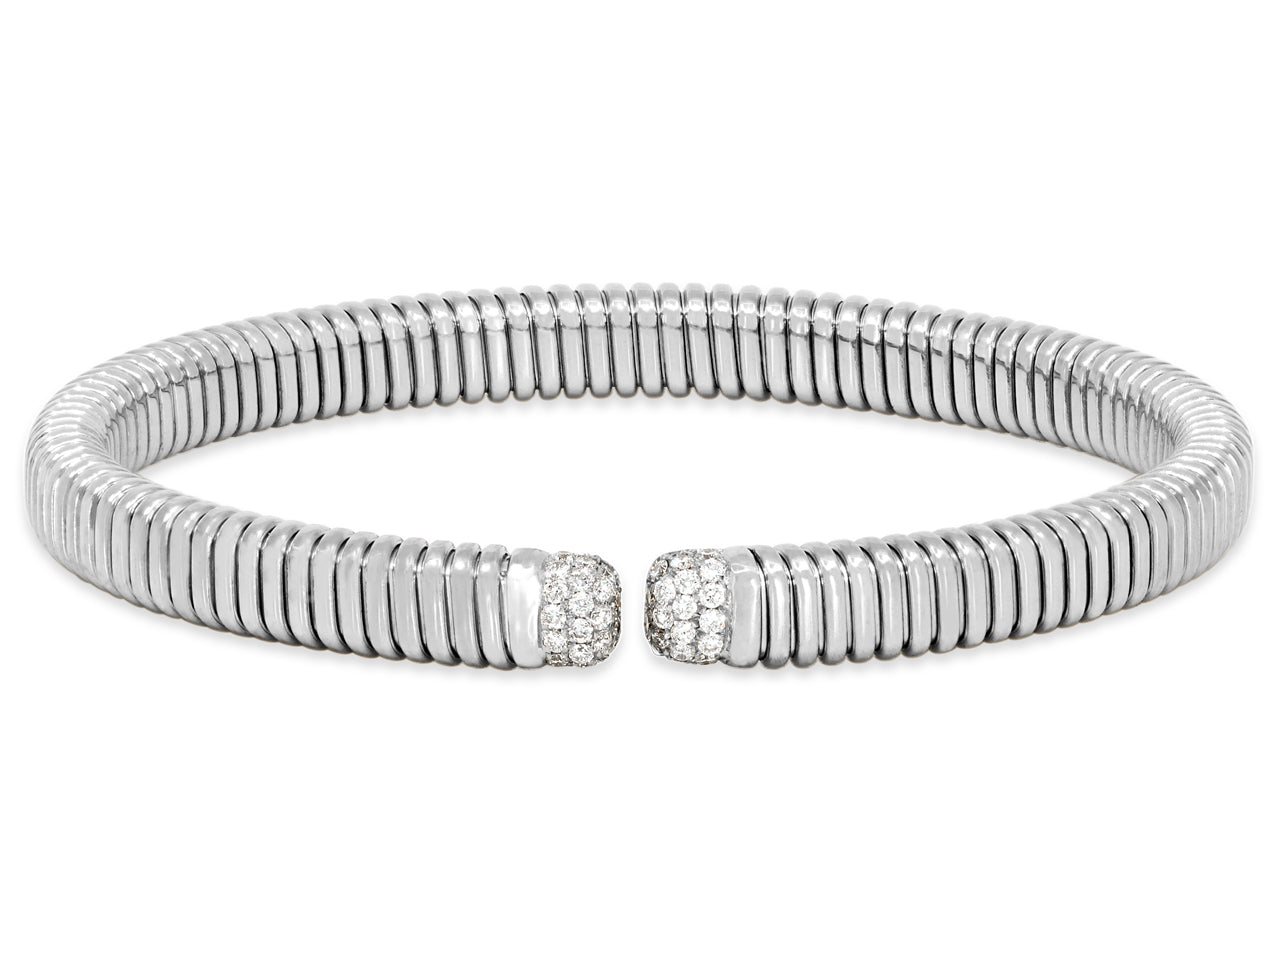 Tubogas Diamond Bracelet in 18K White Gold, by Beladora